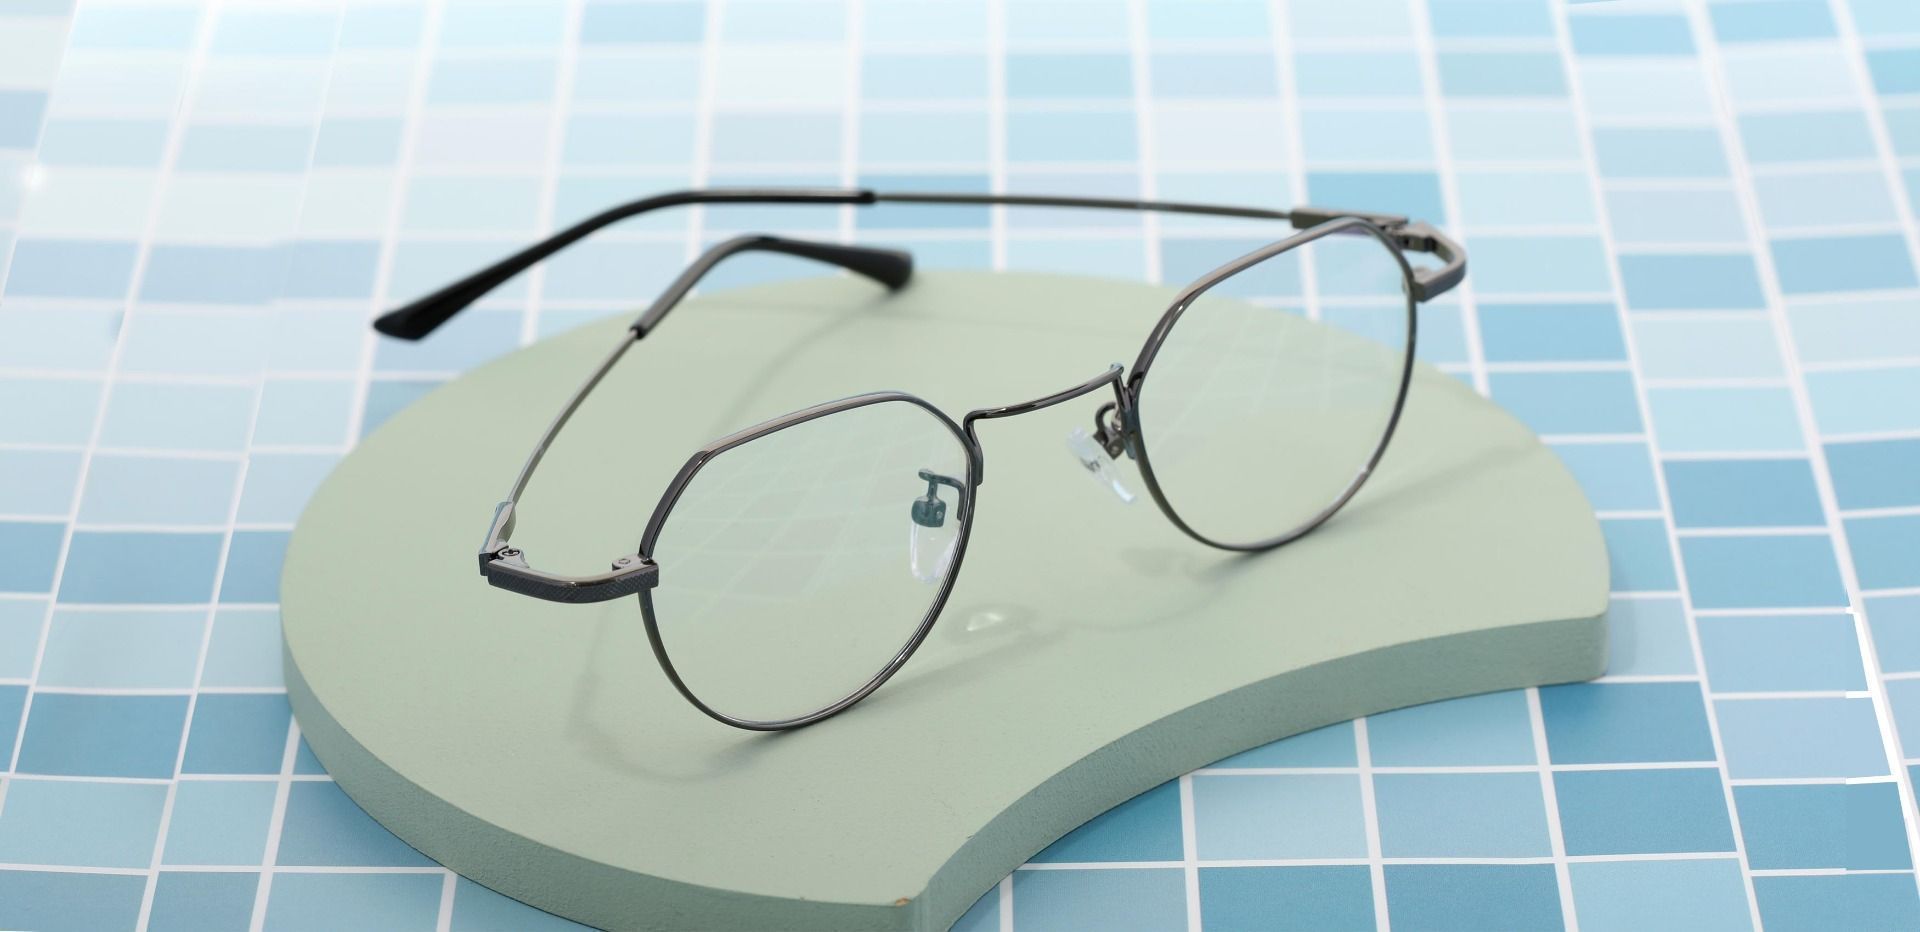 Douglas Geometric Prescription Glasses - Gray